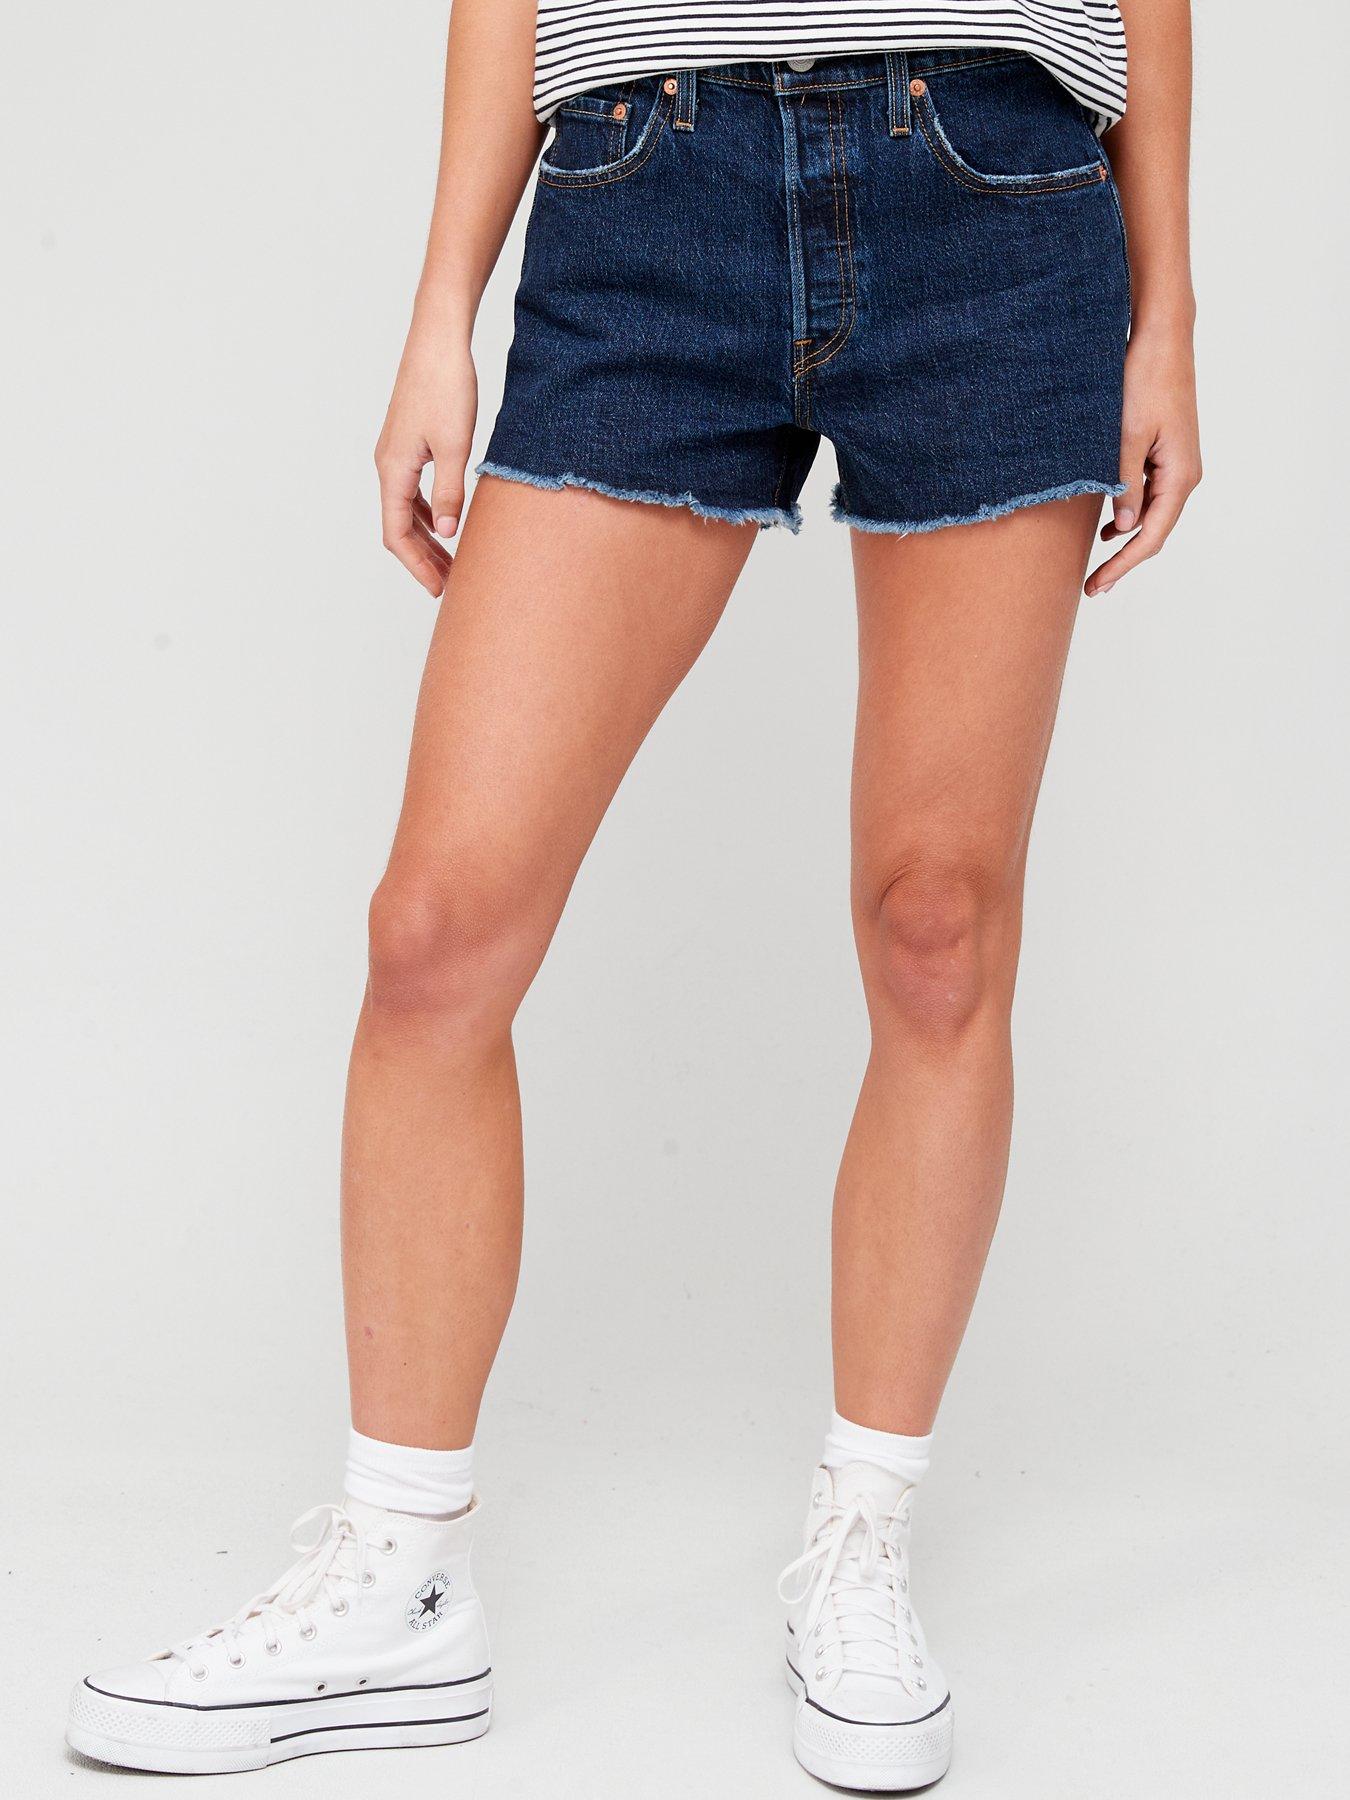 Women`s New GAP Denim Shorts Hot Pants Size UK 6 to 20 Stretch Dark Blue 